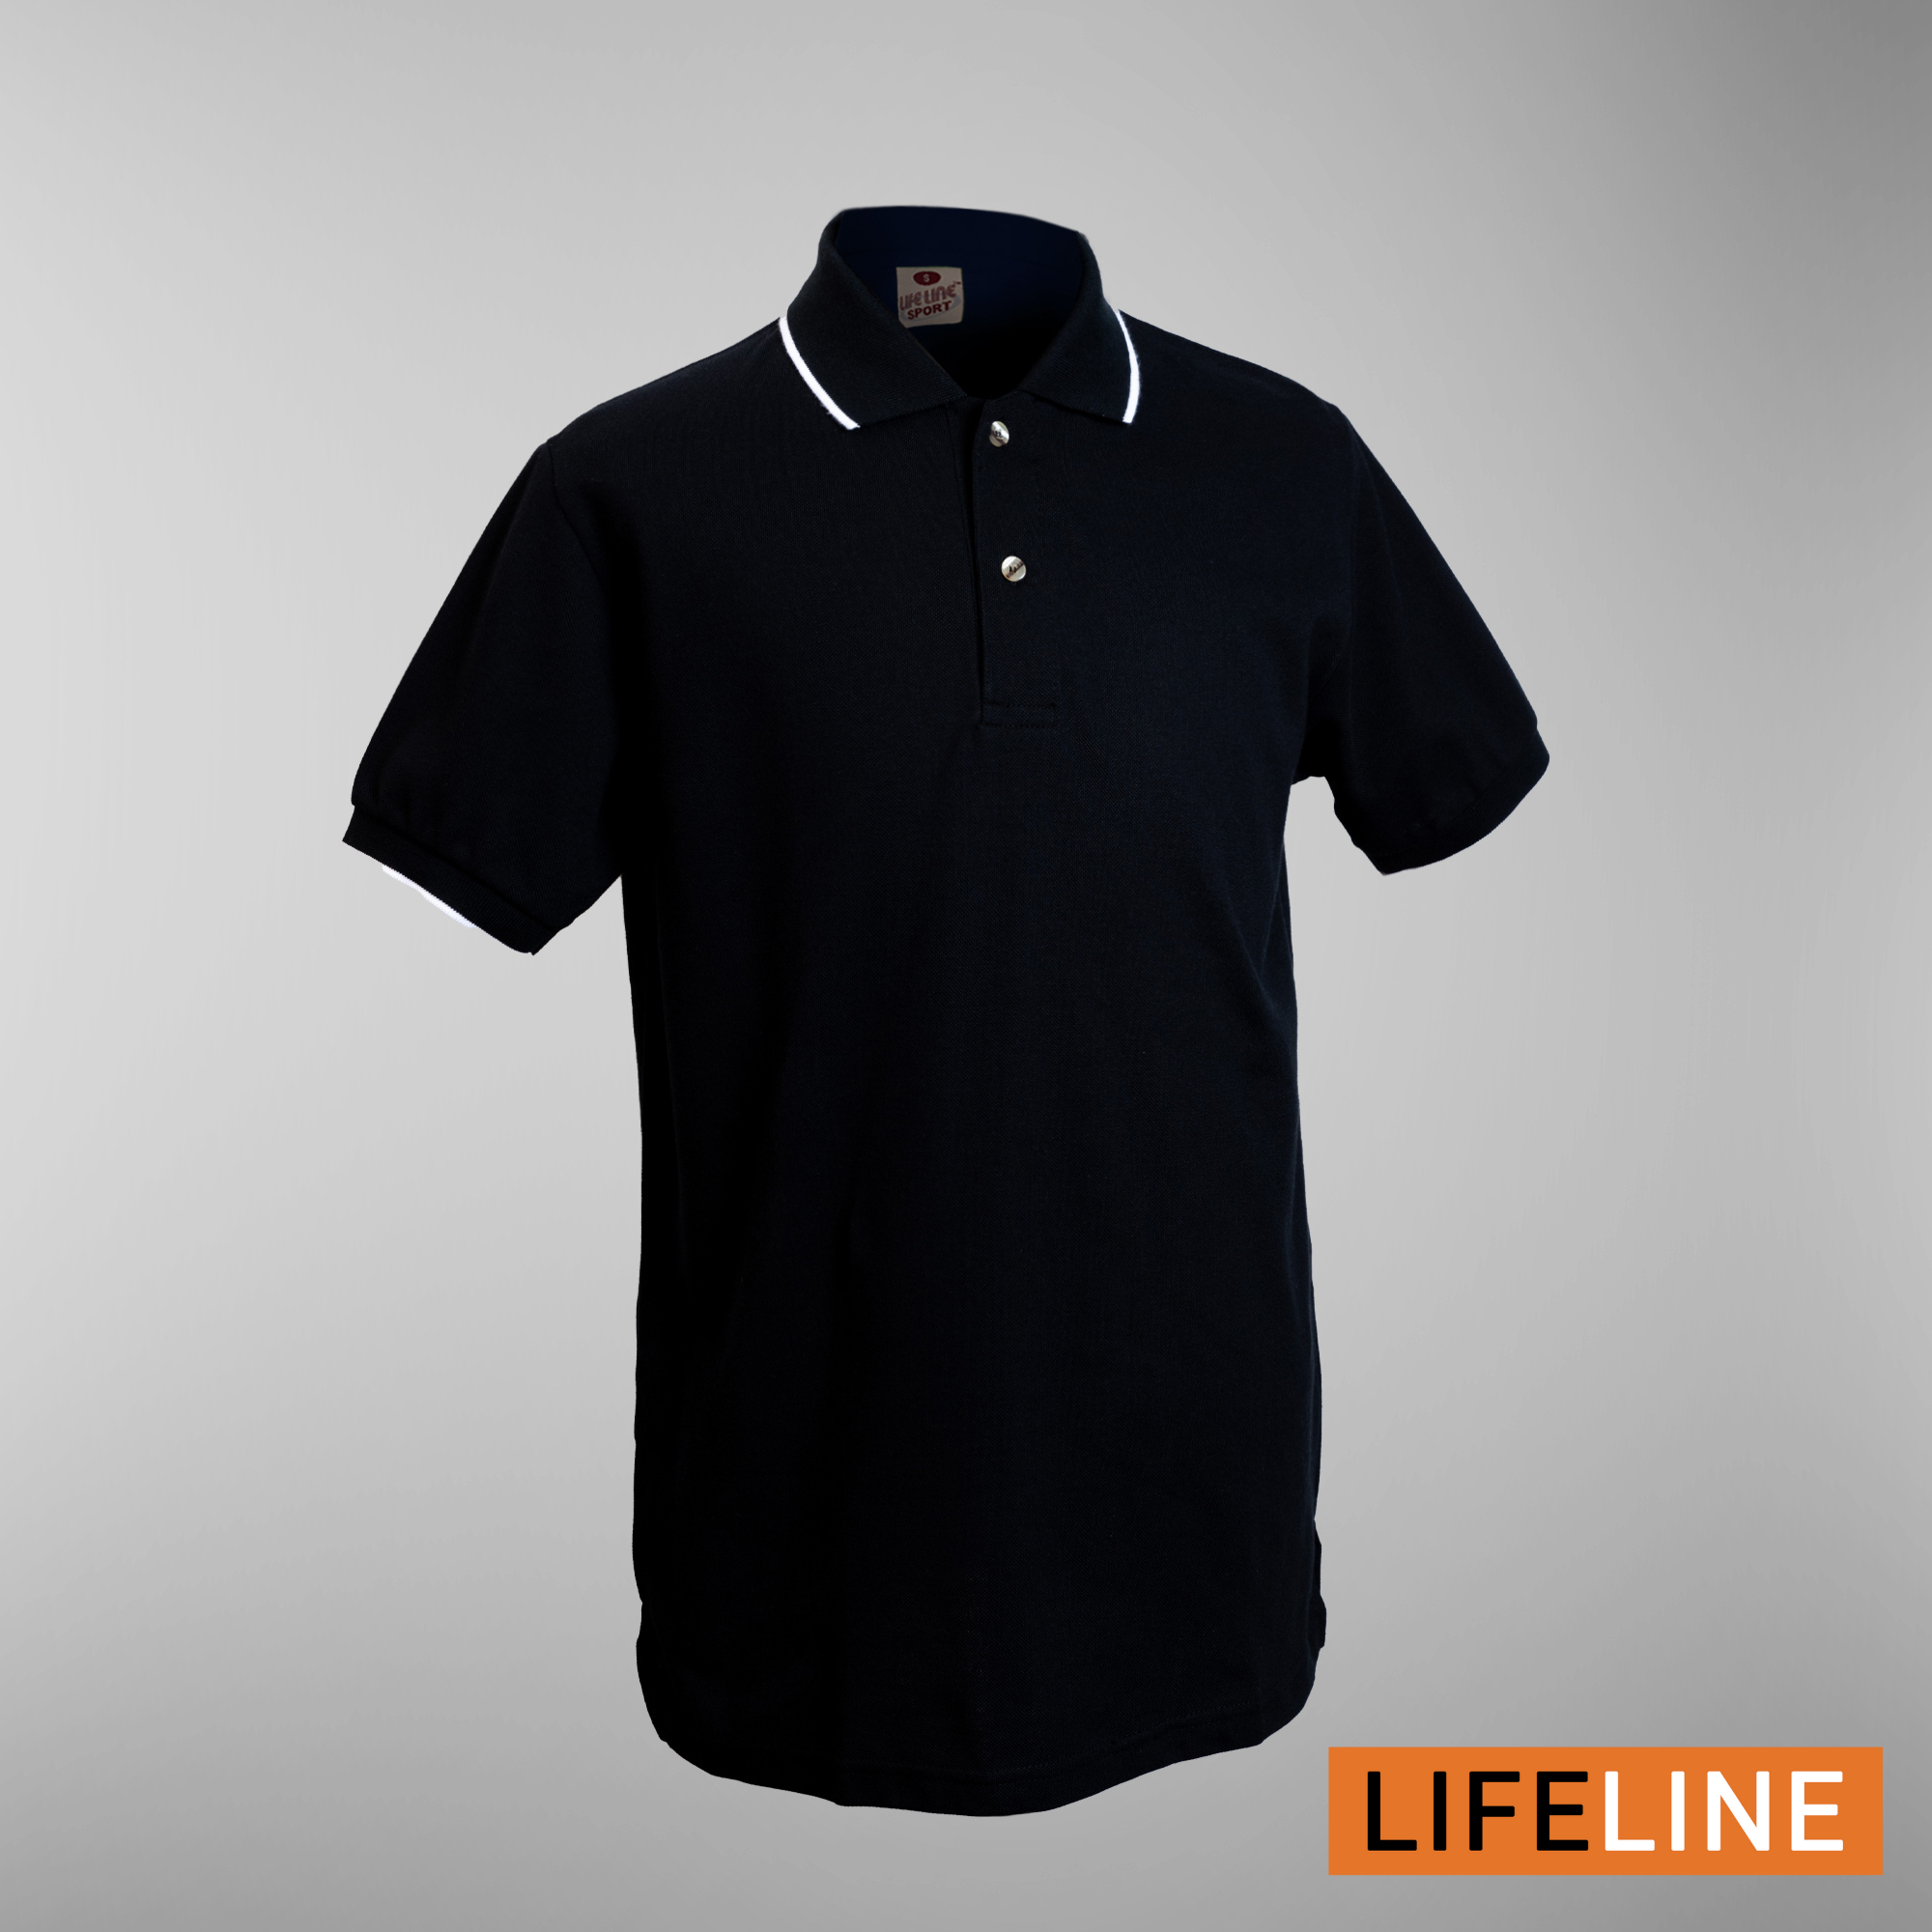 Lifeline Line Polo Shirt (Chaga)